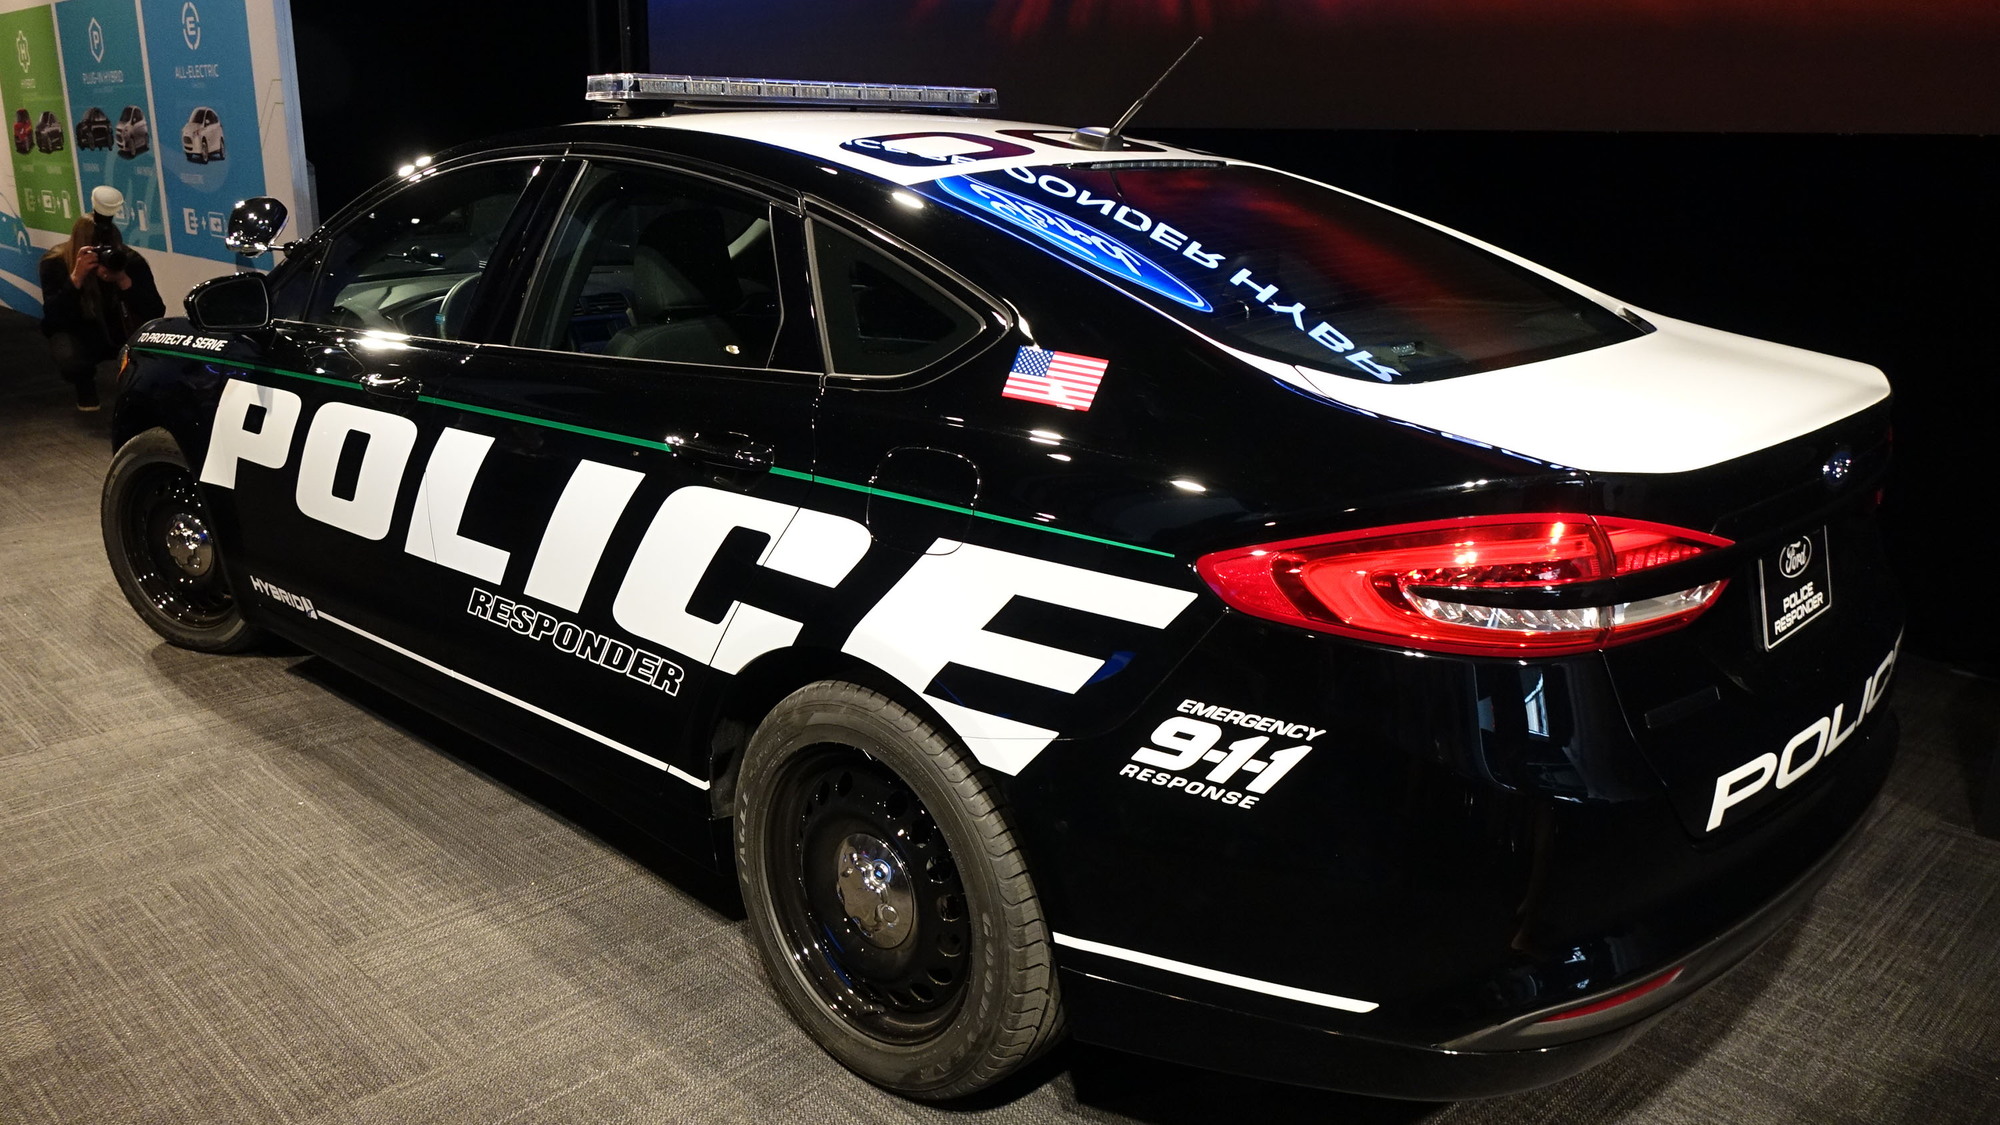 2018 Ford Police Responder Hybrid Sedan pursuit-rated police car